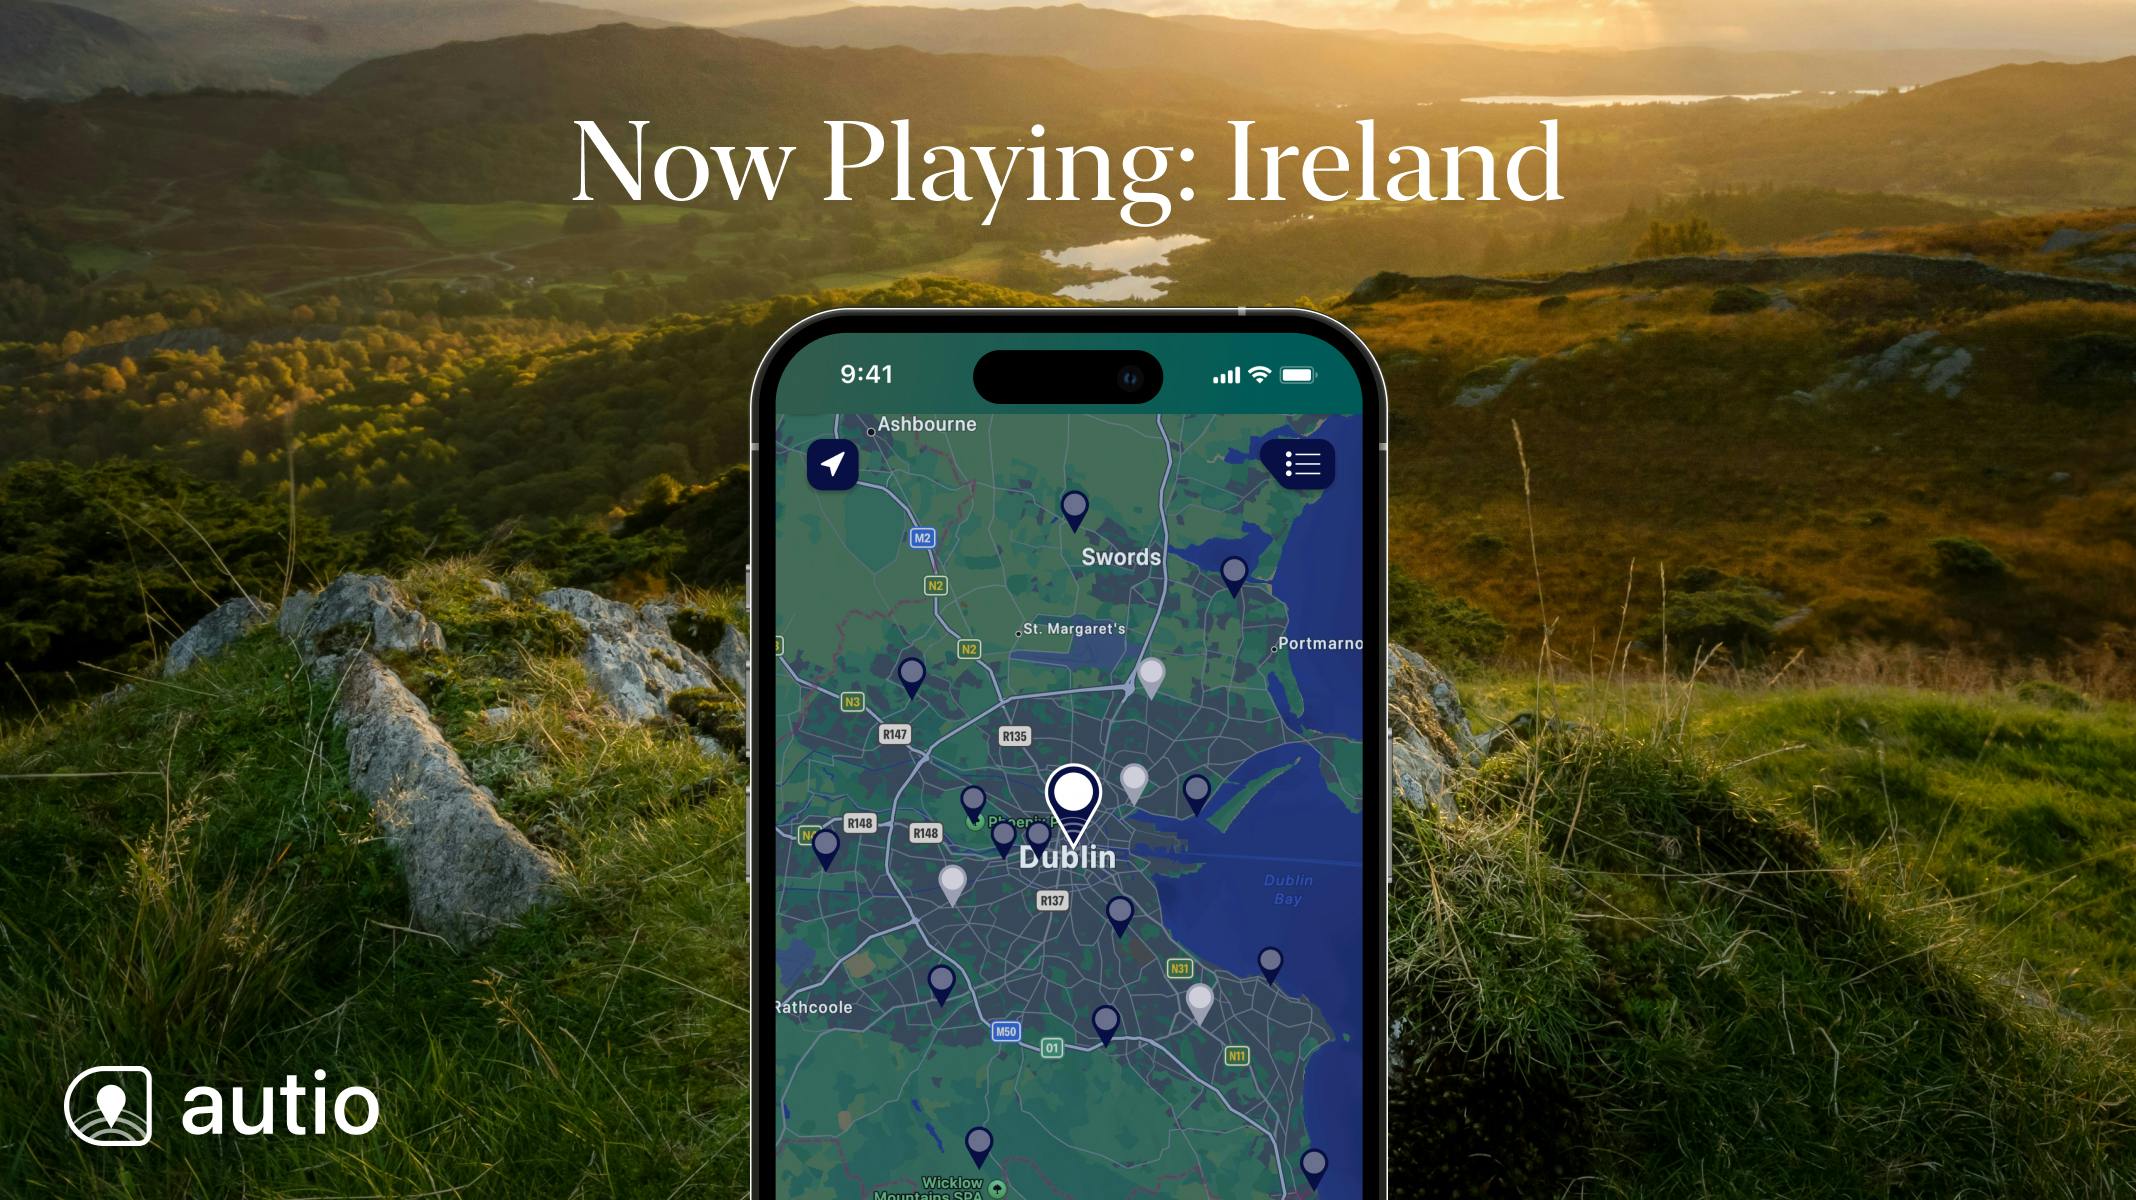 Location-based Travel App, Autio, Announces International Expansion Into Ireland With JetBlue